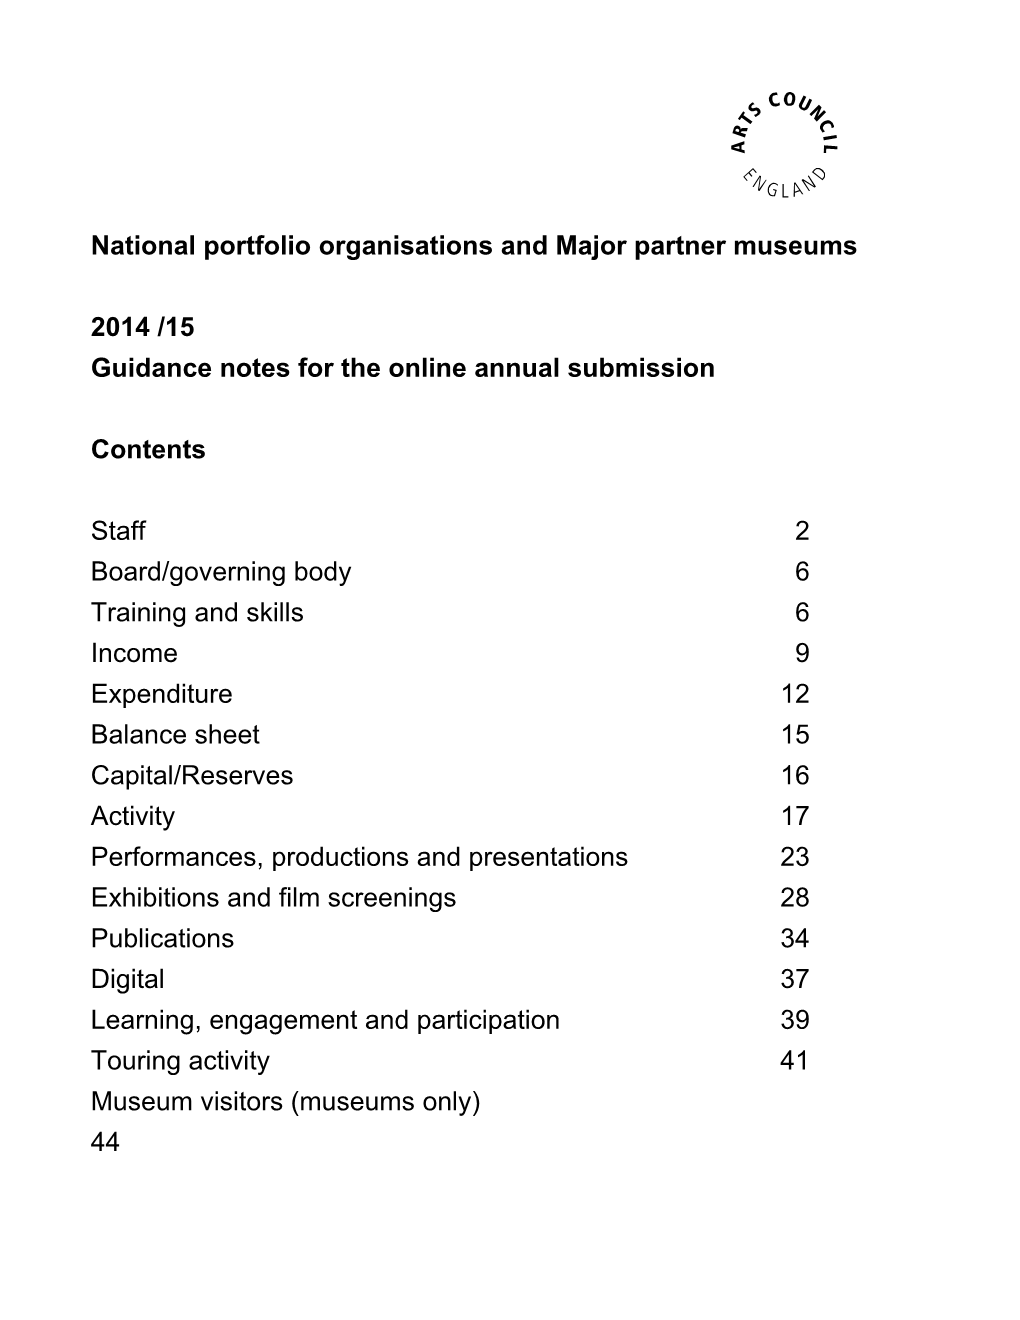 National Portfolio Organisations and Major Partner Museums